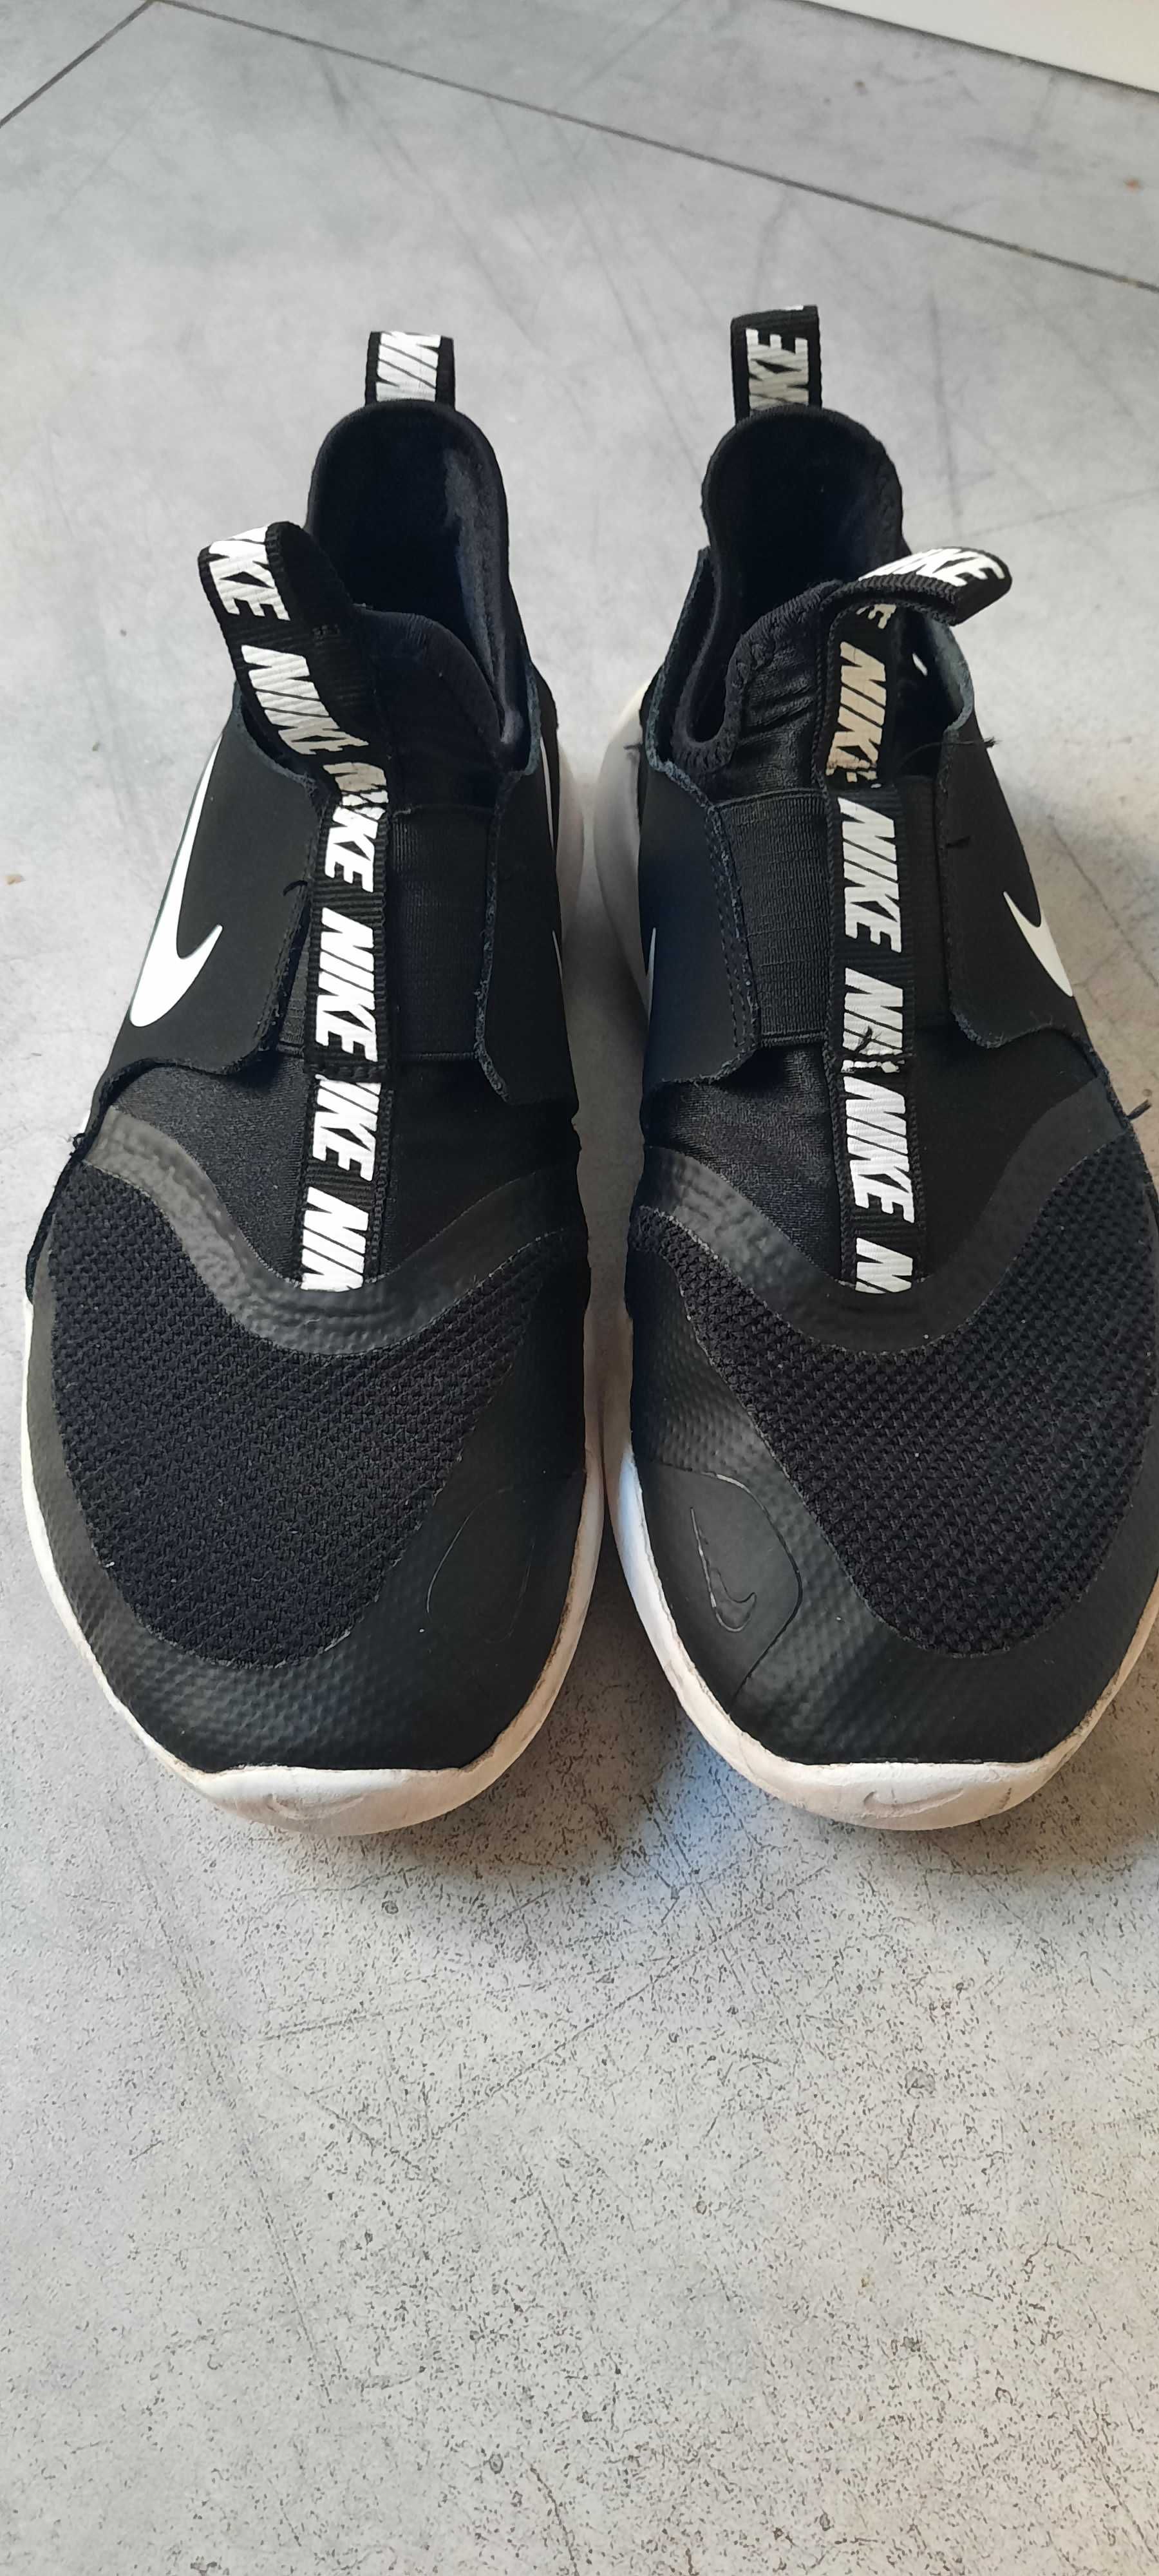 buty do biegania Nike Flex Runner Czarne R. 37.5